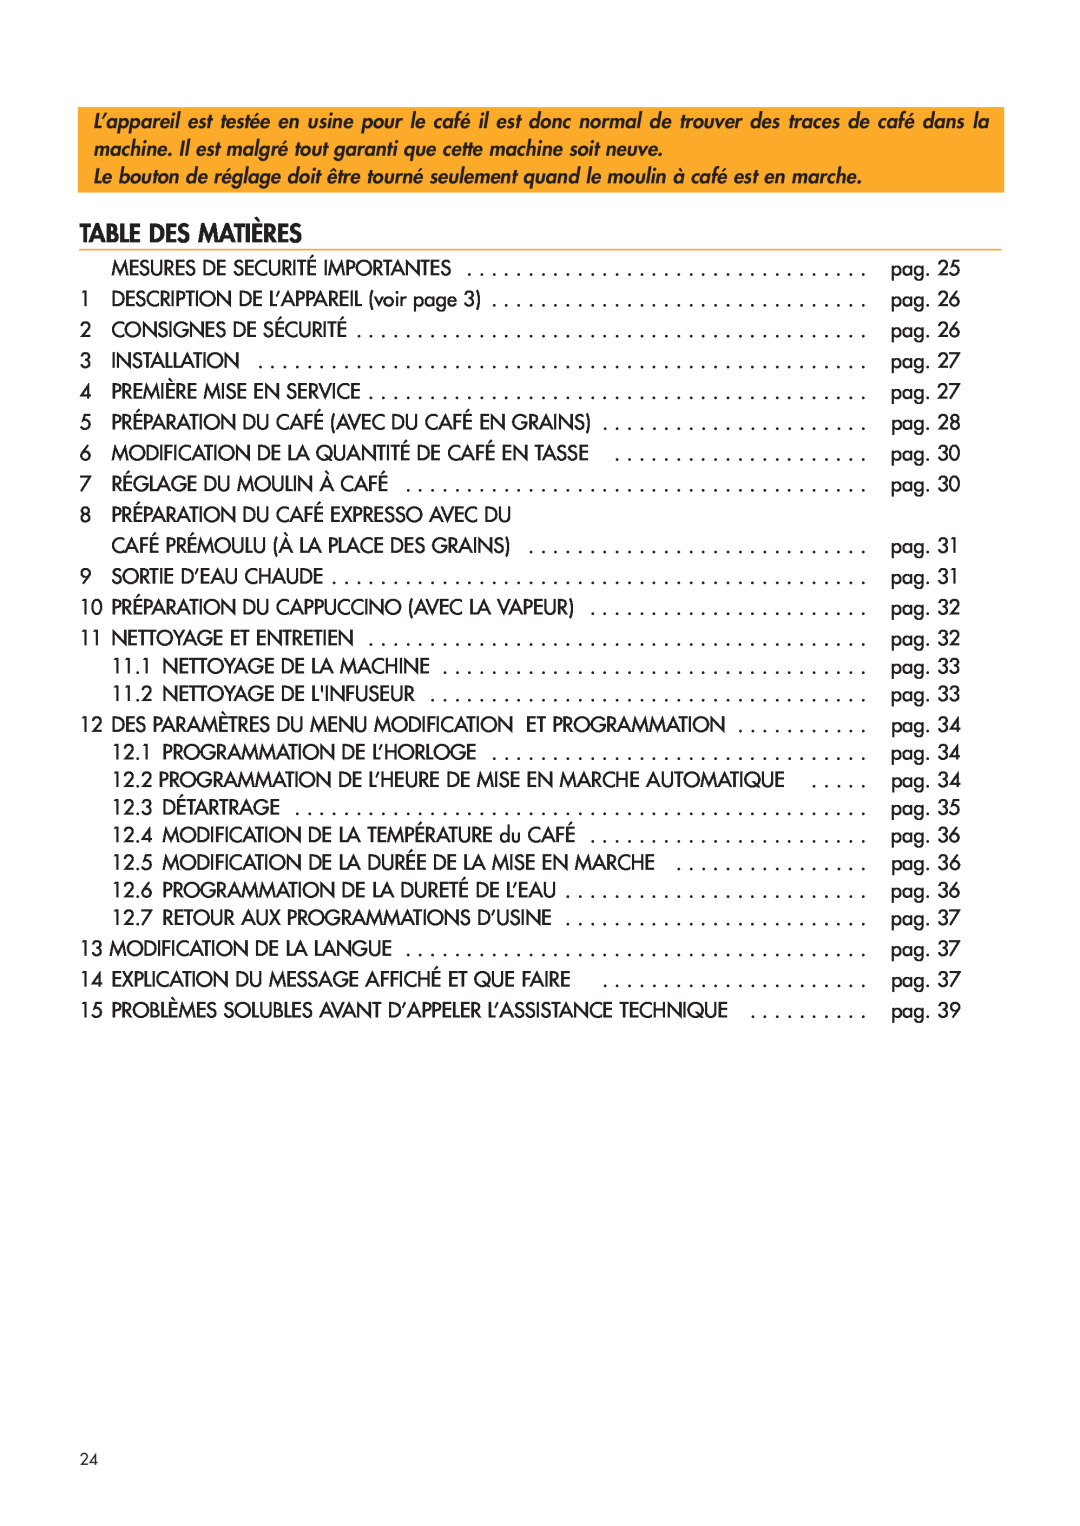 DeLonghi ESAM4400 manual Table Des Matières, Des Paramètres Du Menu Modification Et Programmation 